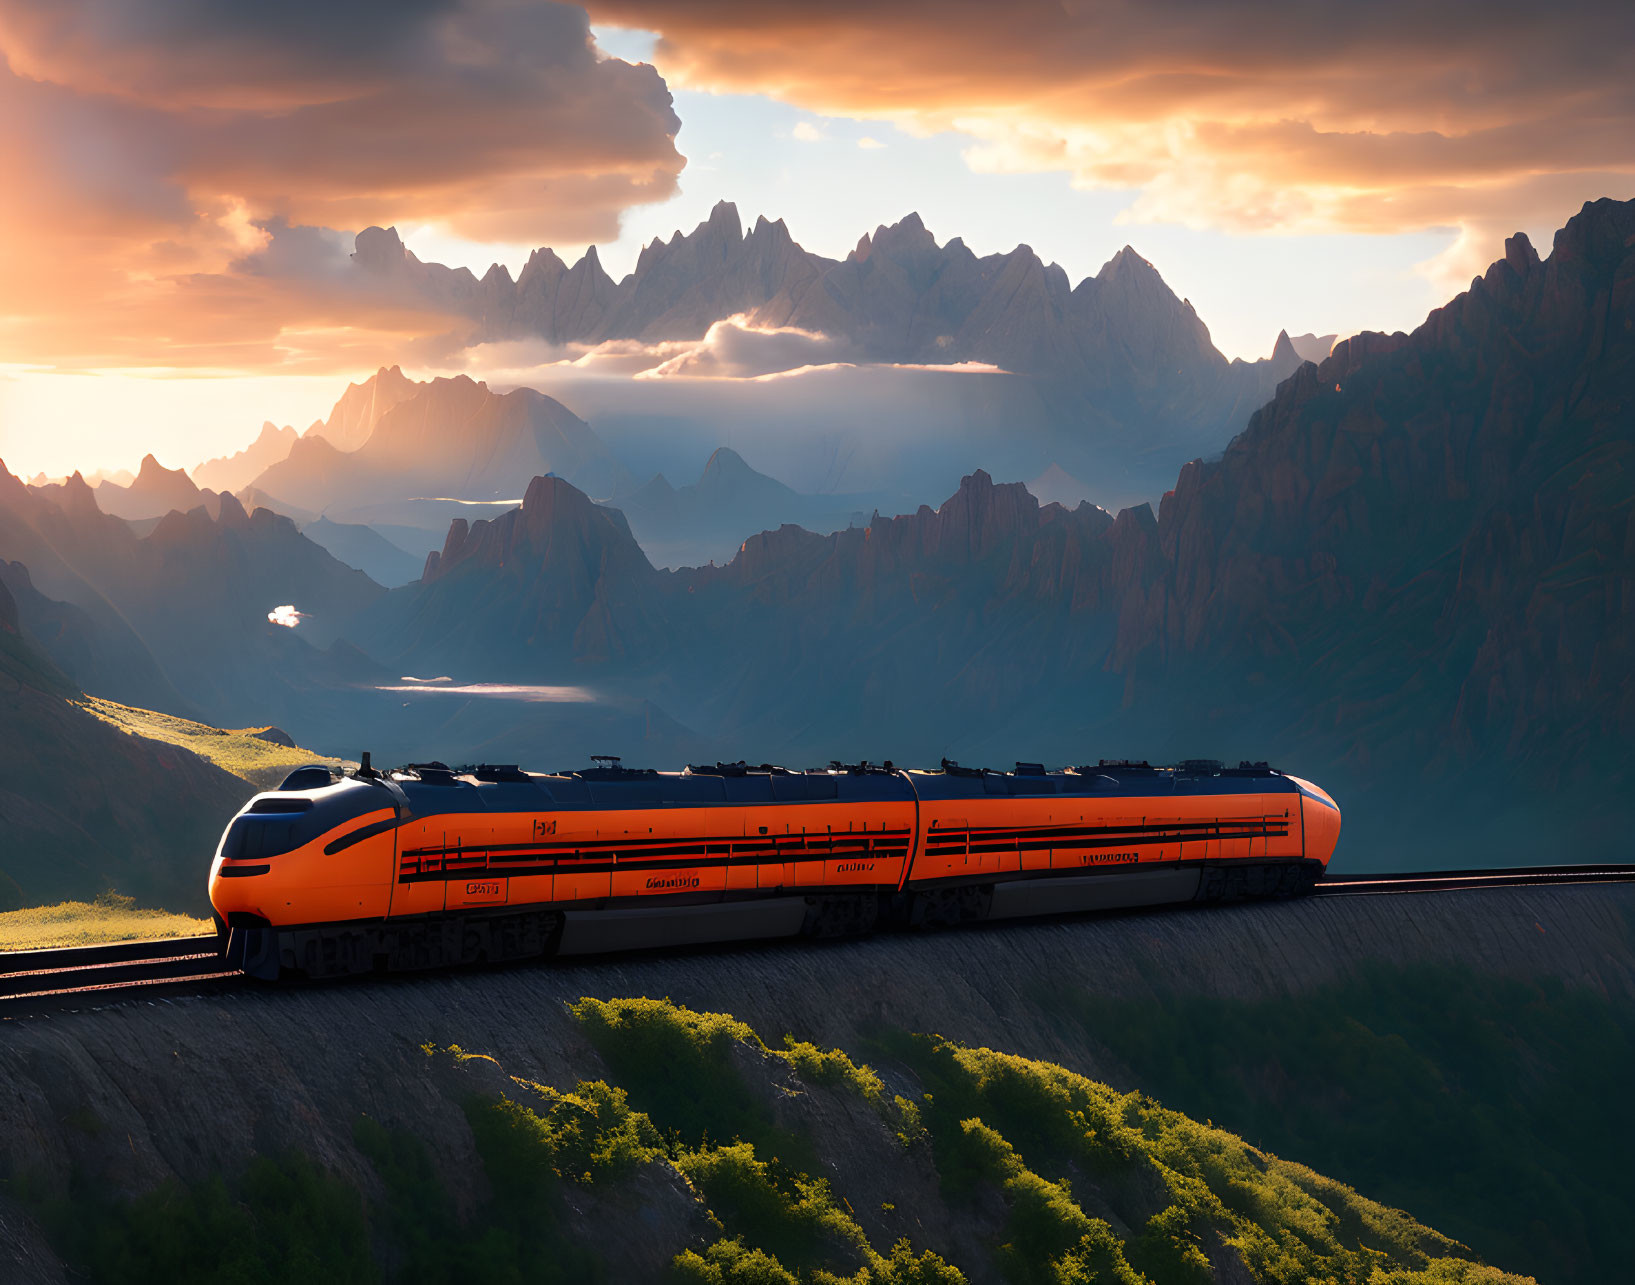 High-speed orange train in mountainous landscape at sunset